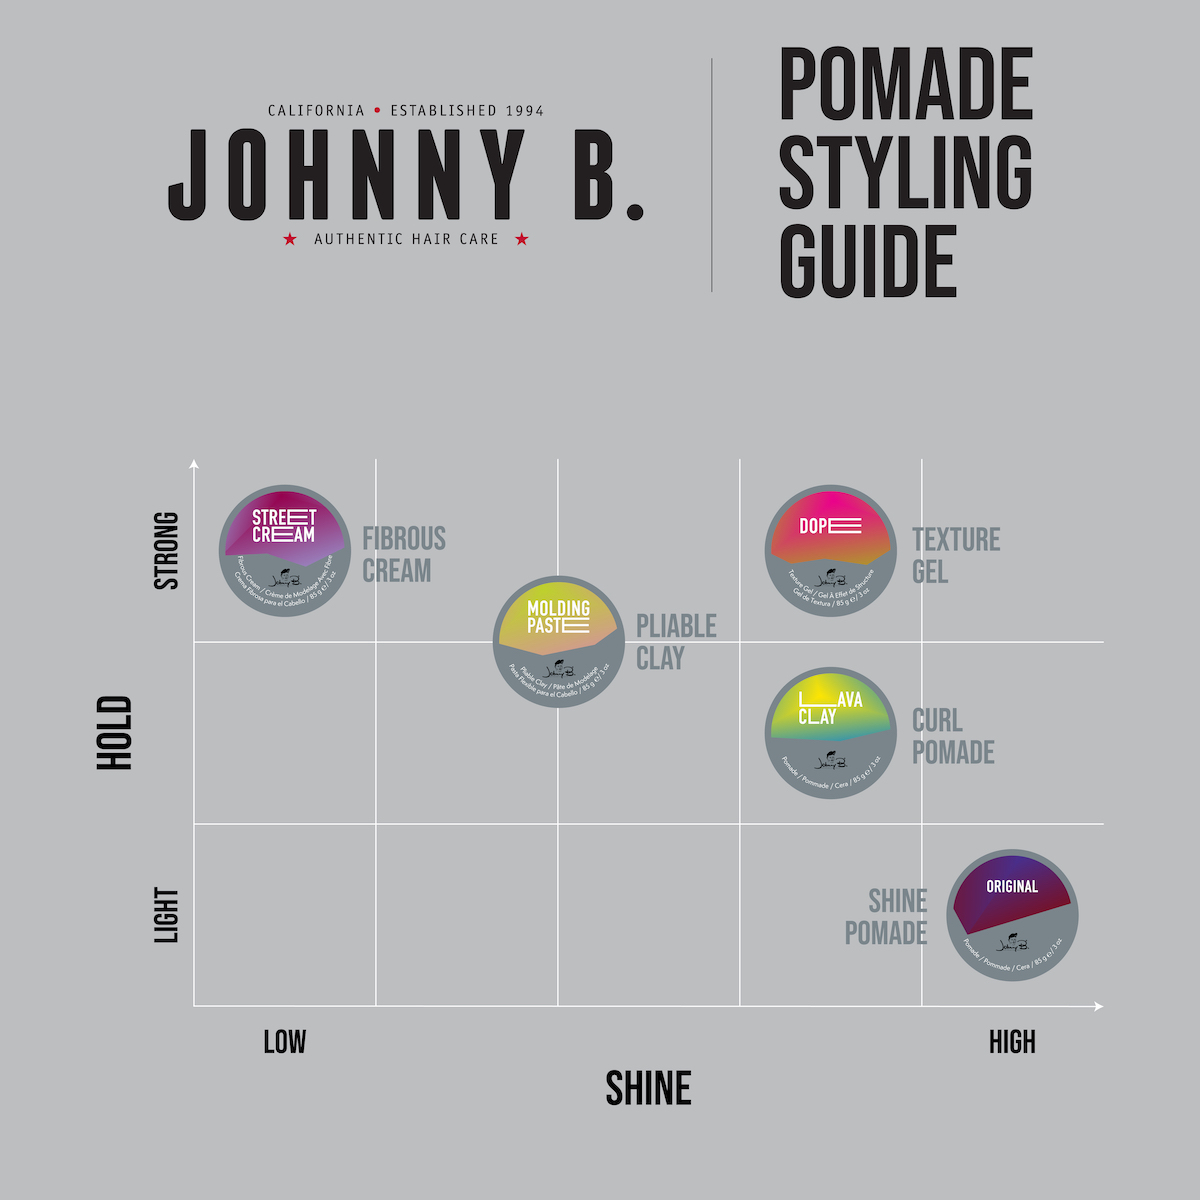 Pomade styling guide matrix